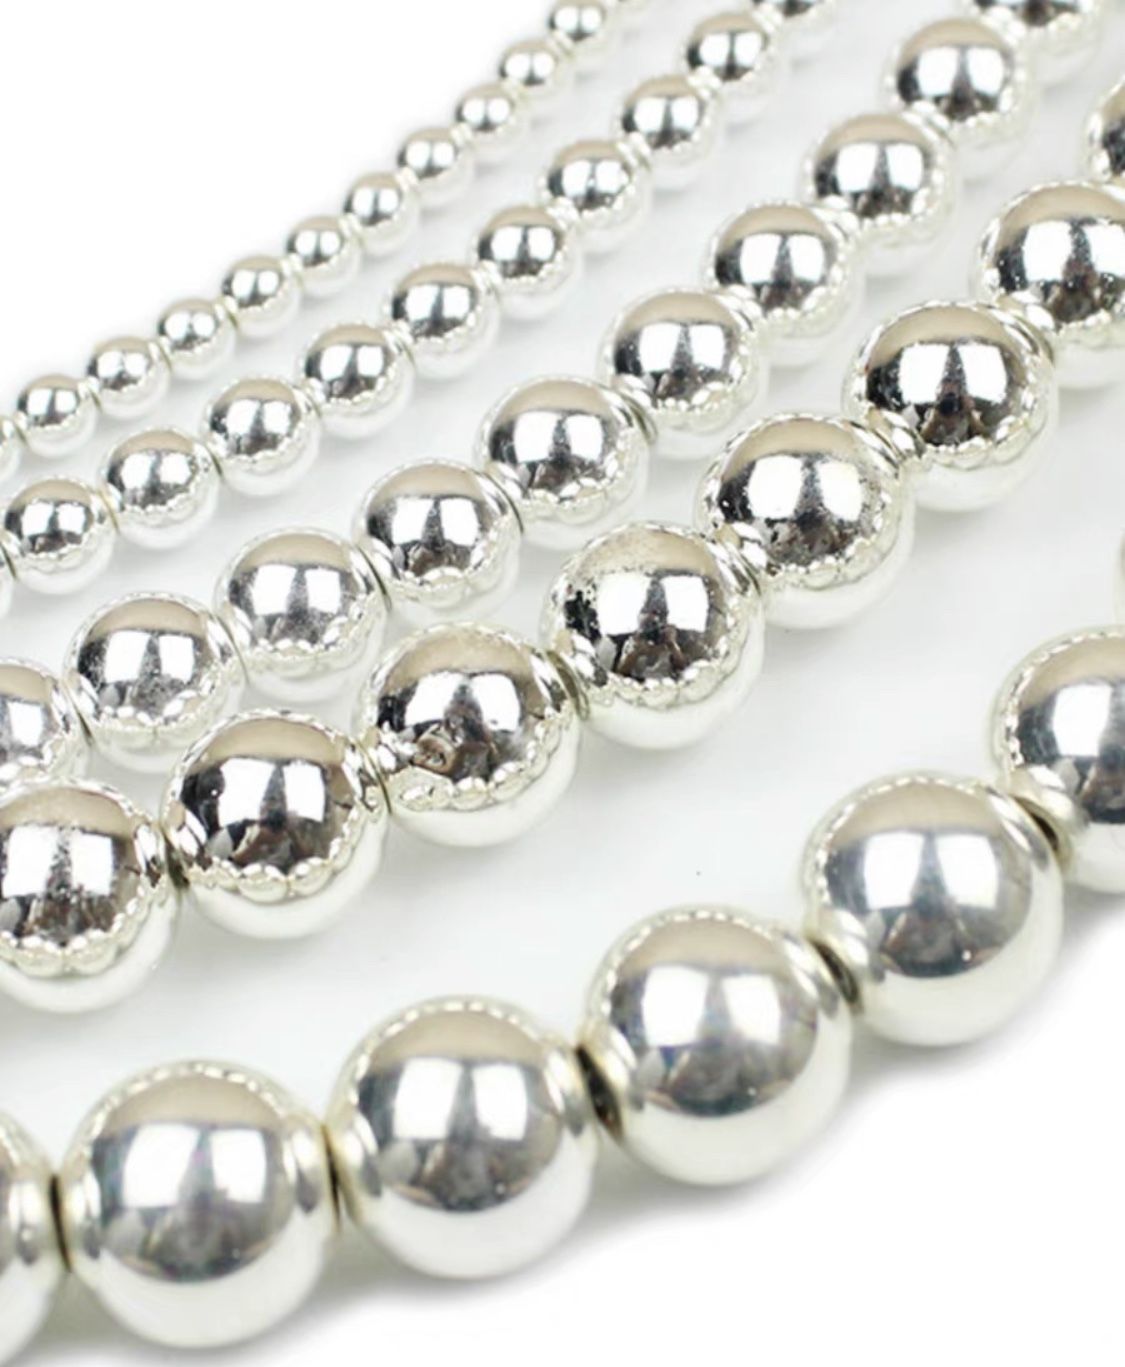 Hematite Silver 8mm Loose Beads (1 strand 15”-16”)